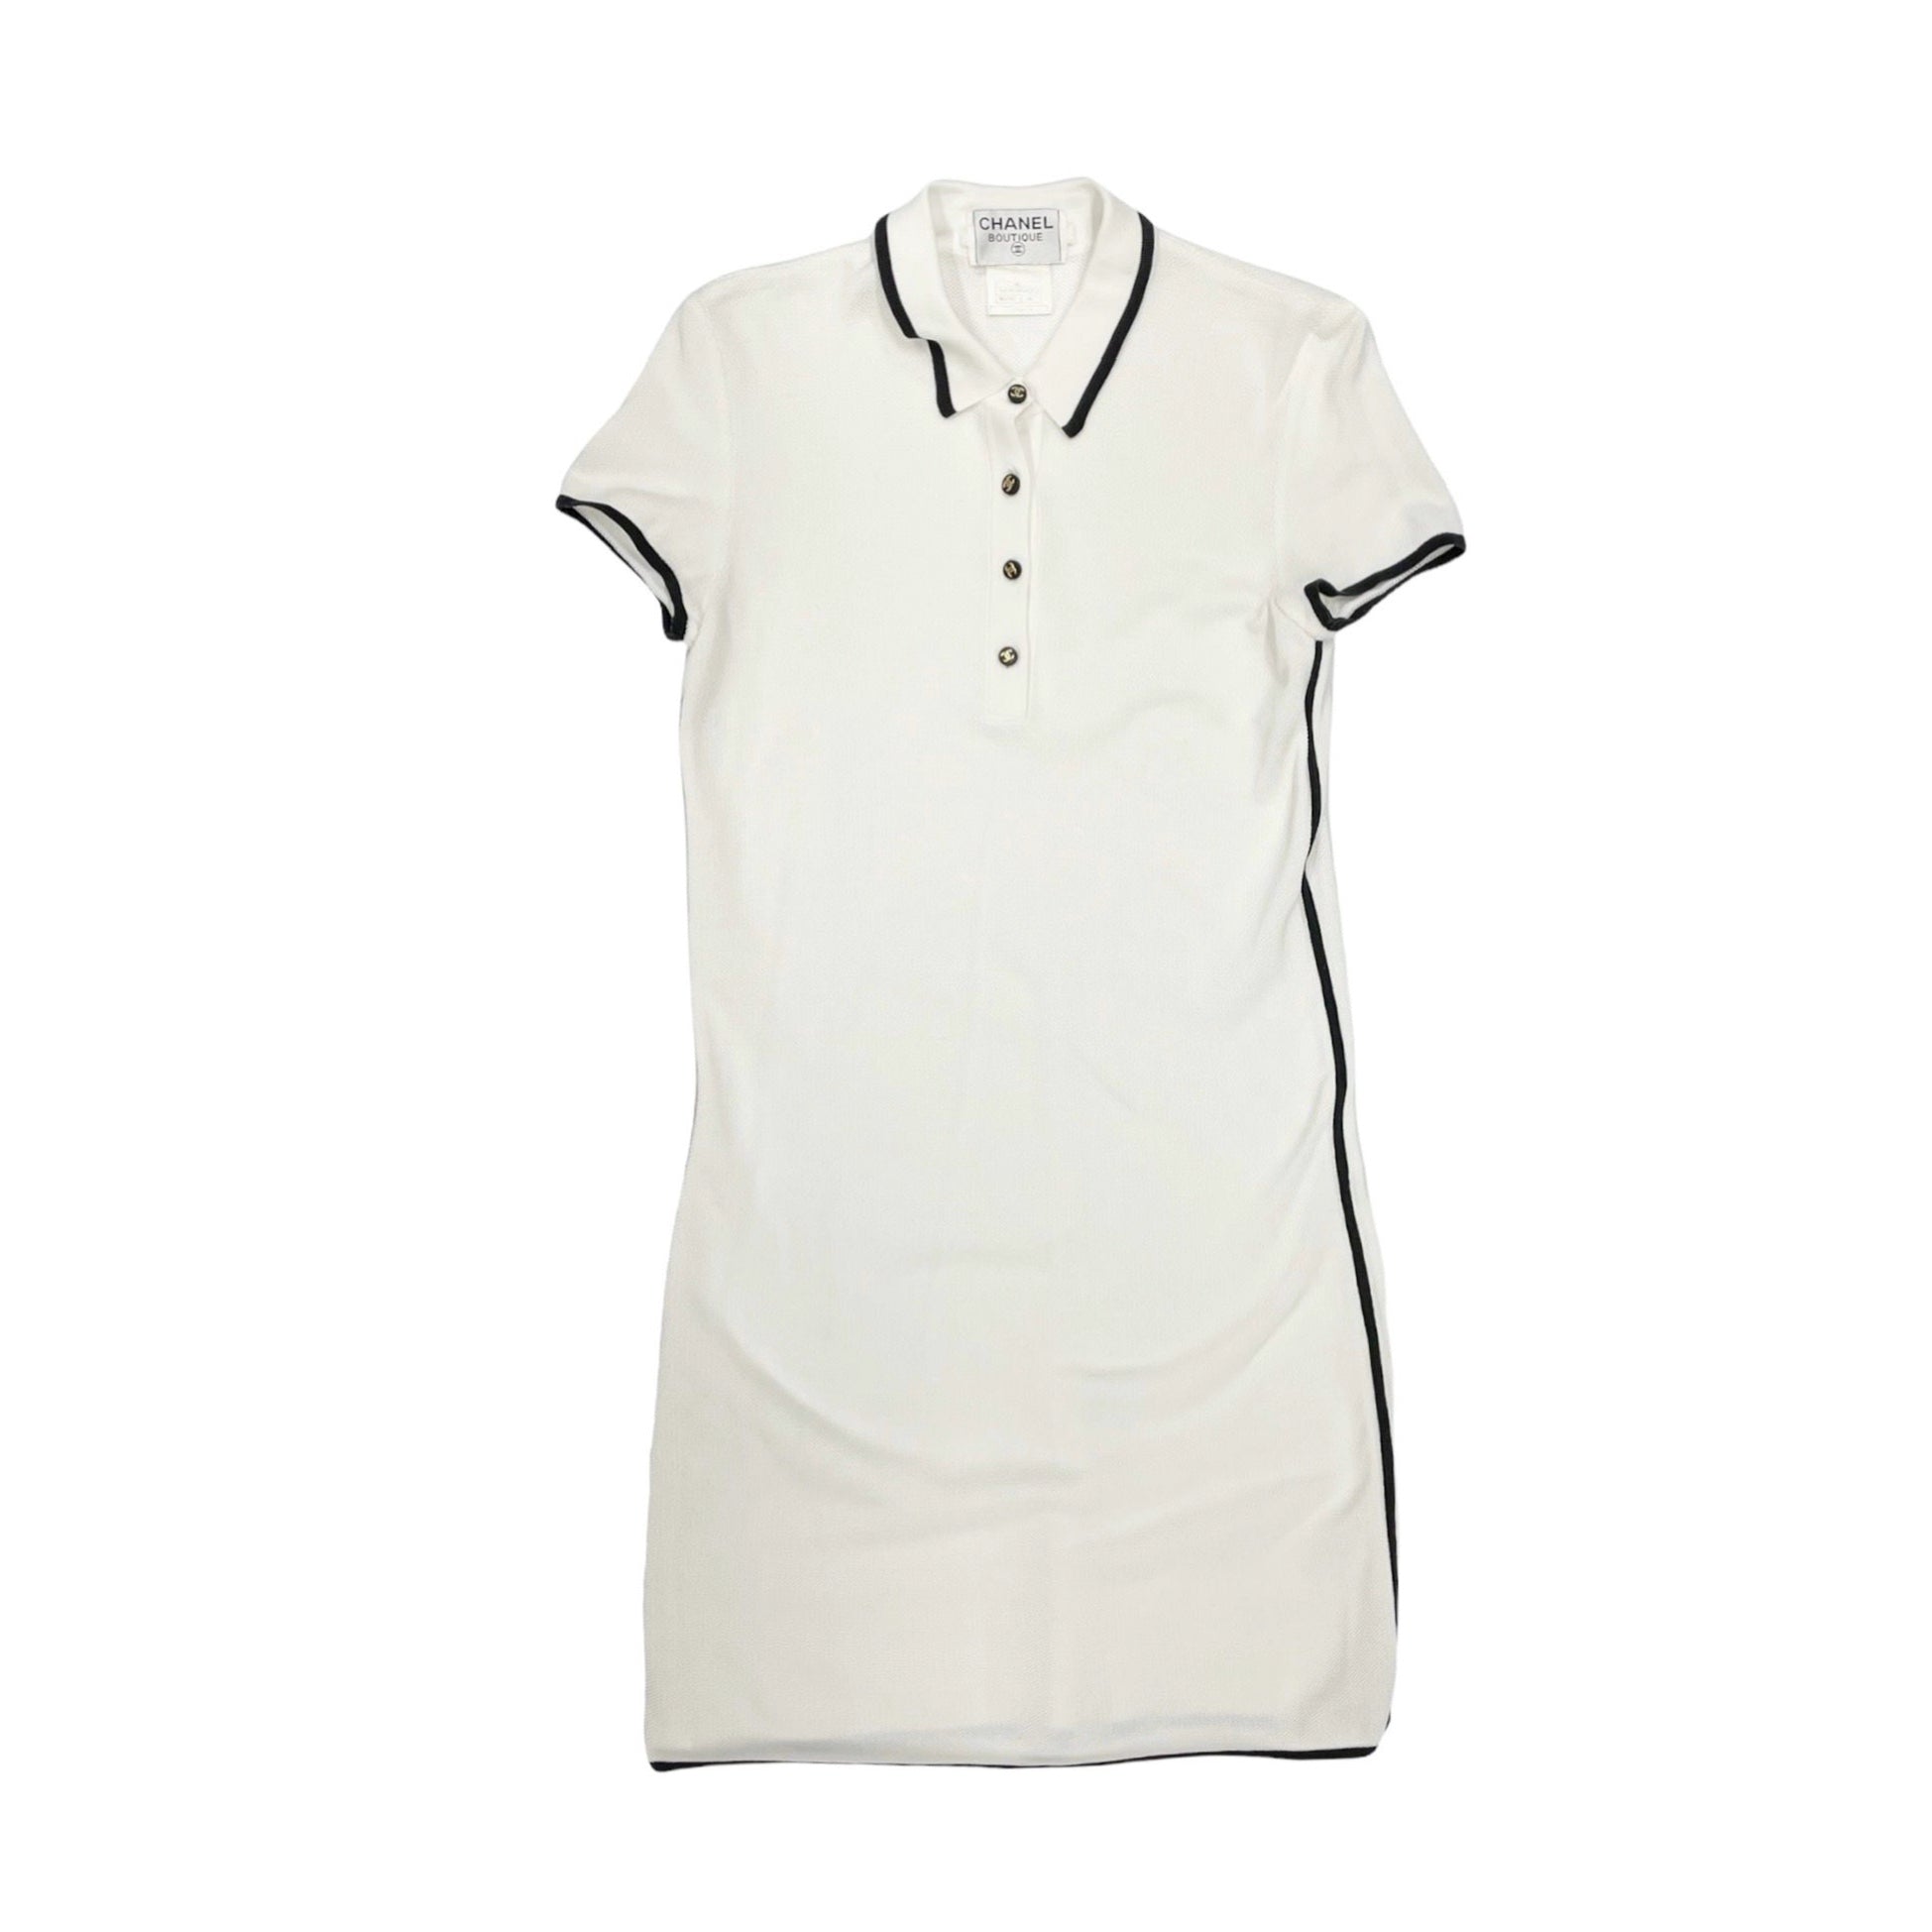 chanel white dress shirt